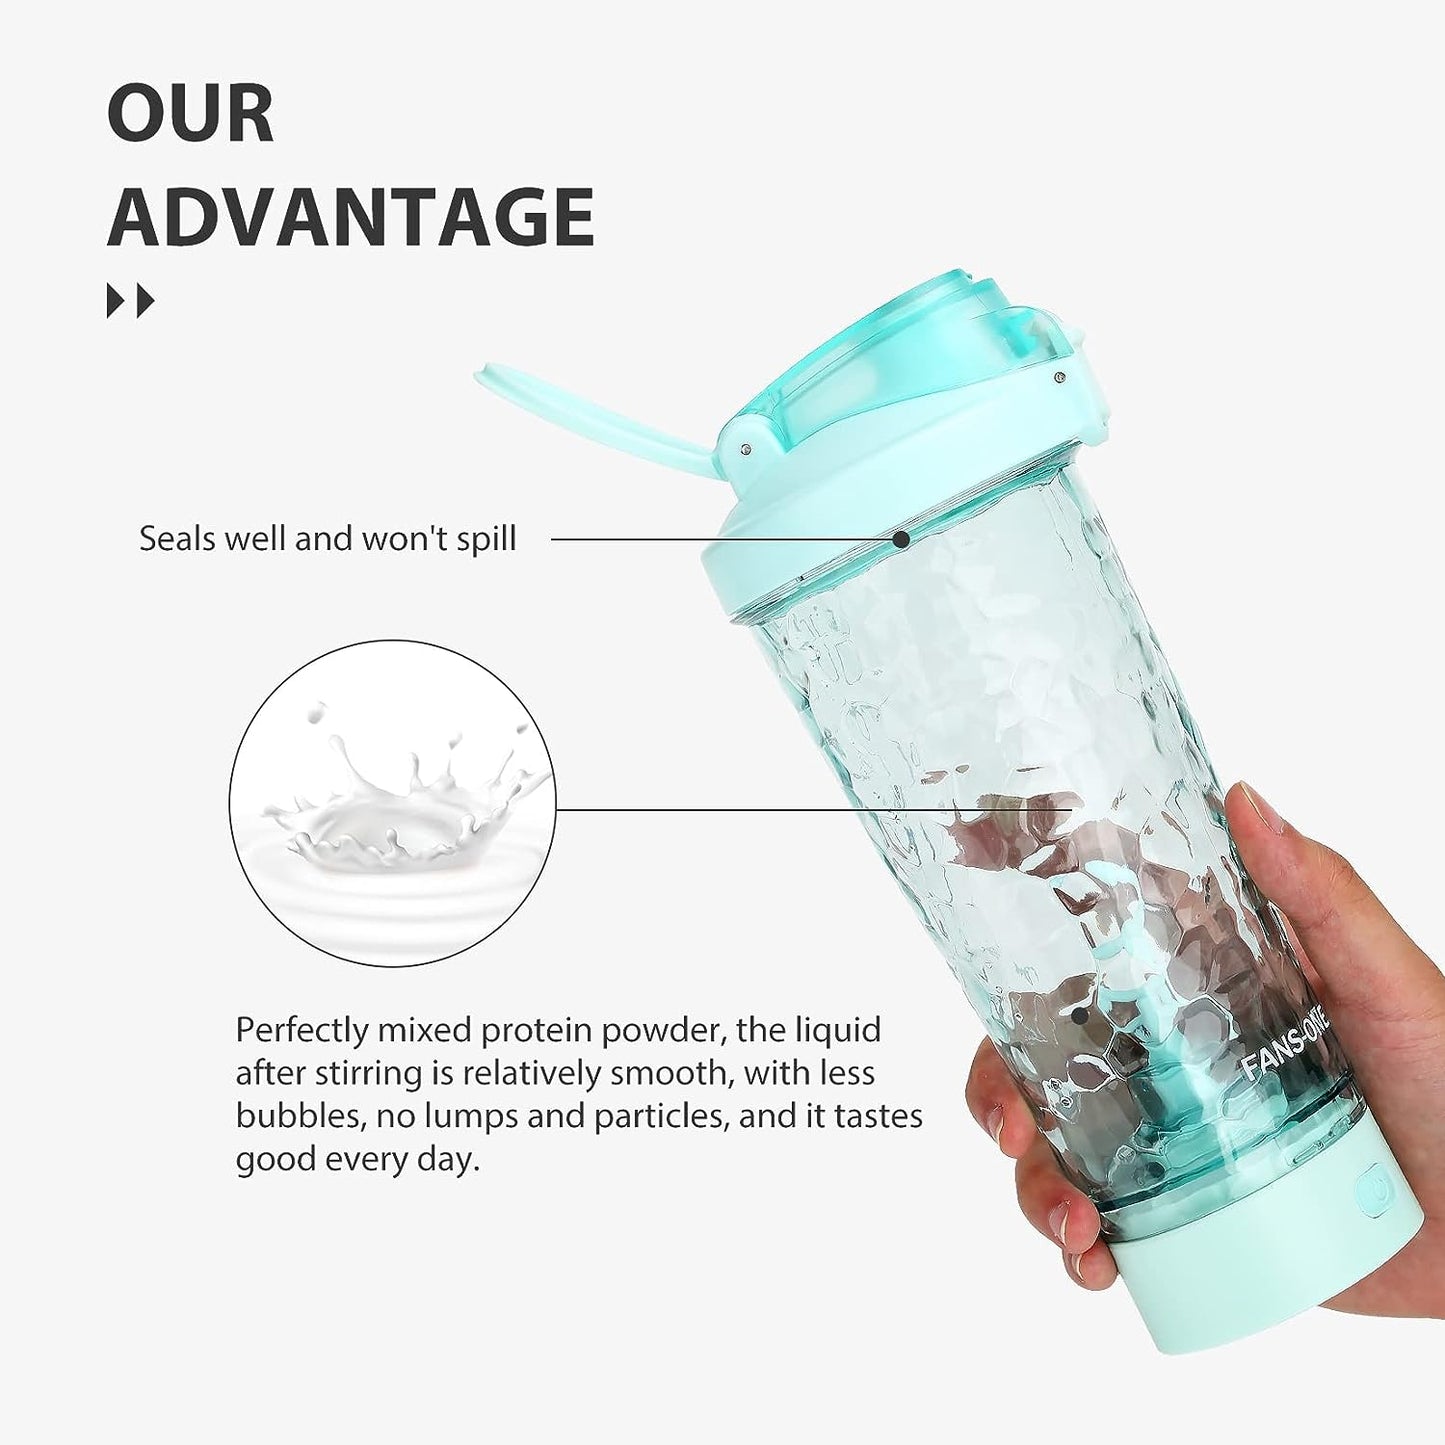  FANS-ONE Premium Electric Protein Shaker Bottle, 24 oz